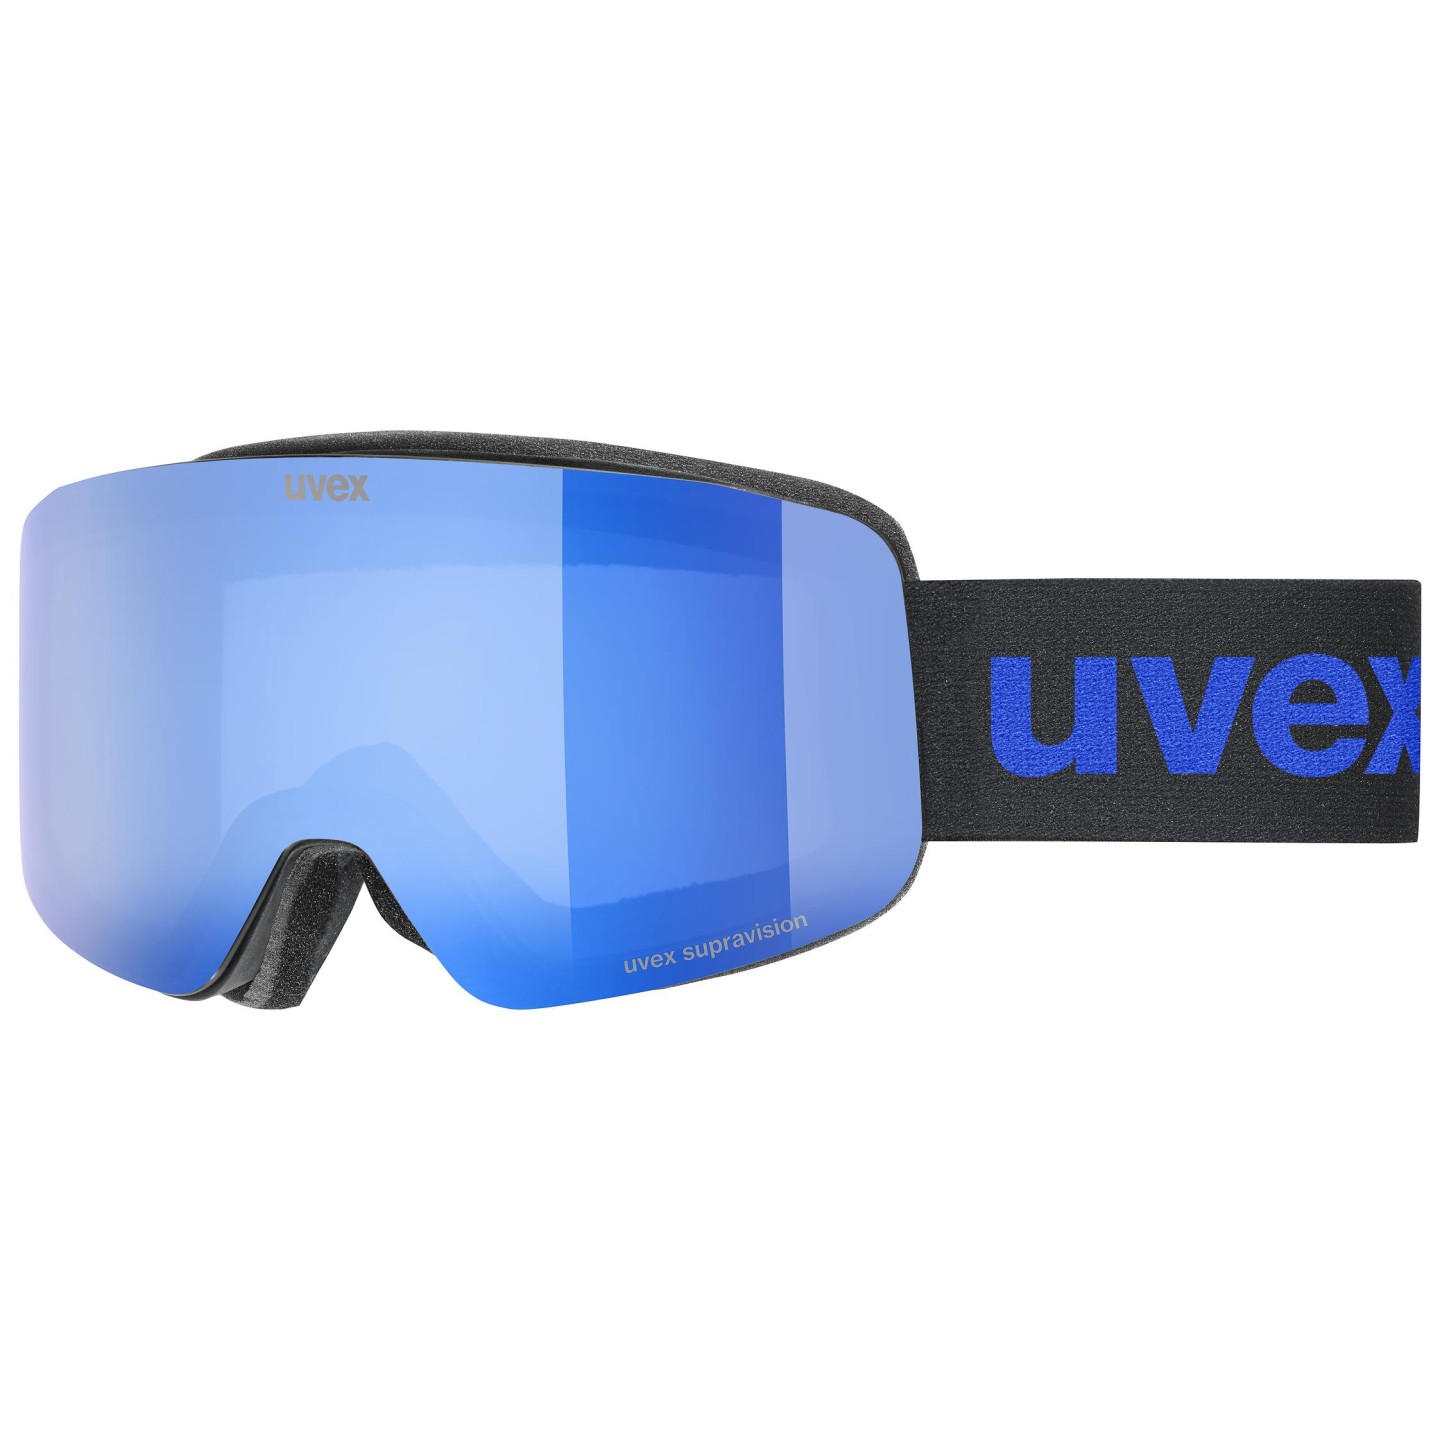 Uvex-PWDR-black-matt-blue-4030